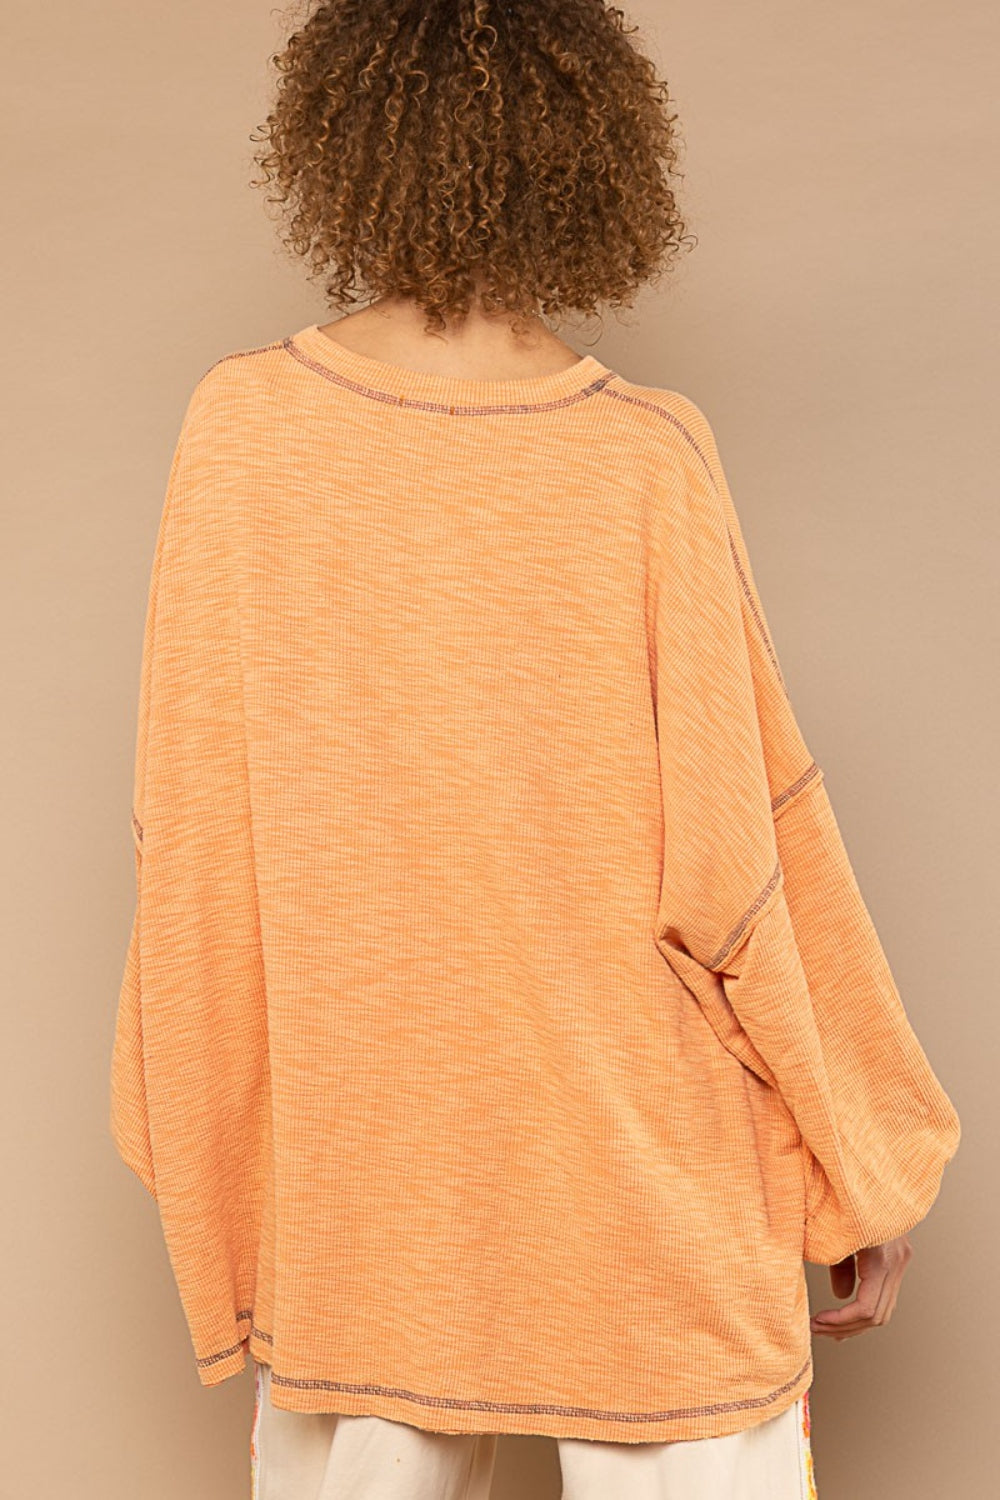 POL Creamsicle Orange Exposed Seam Round Neck Long Sleeve Top